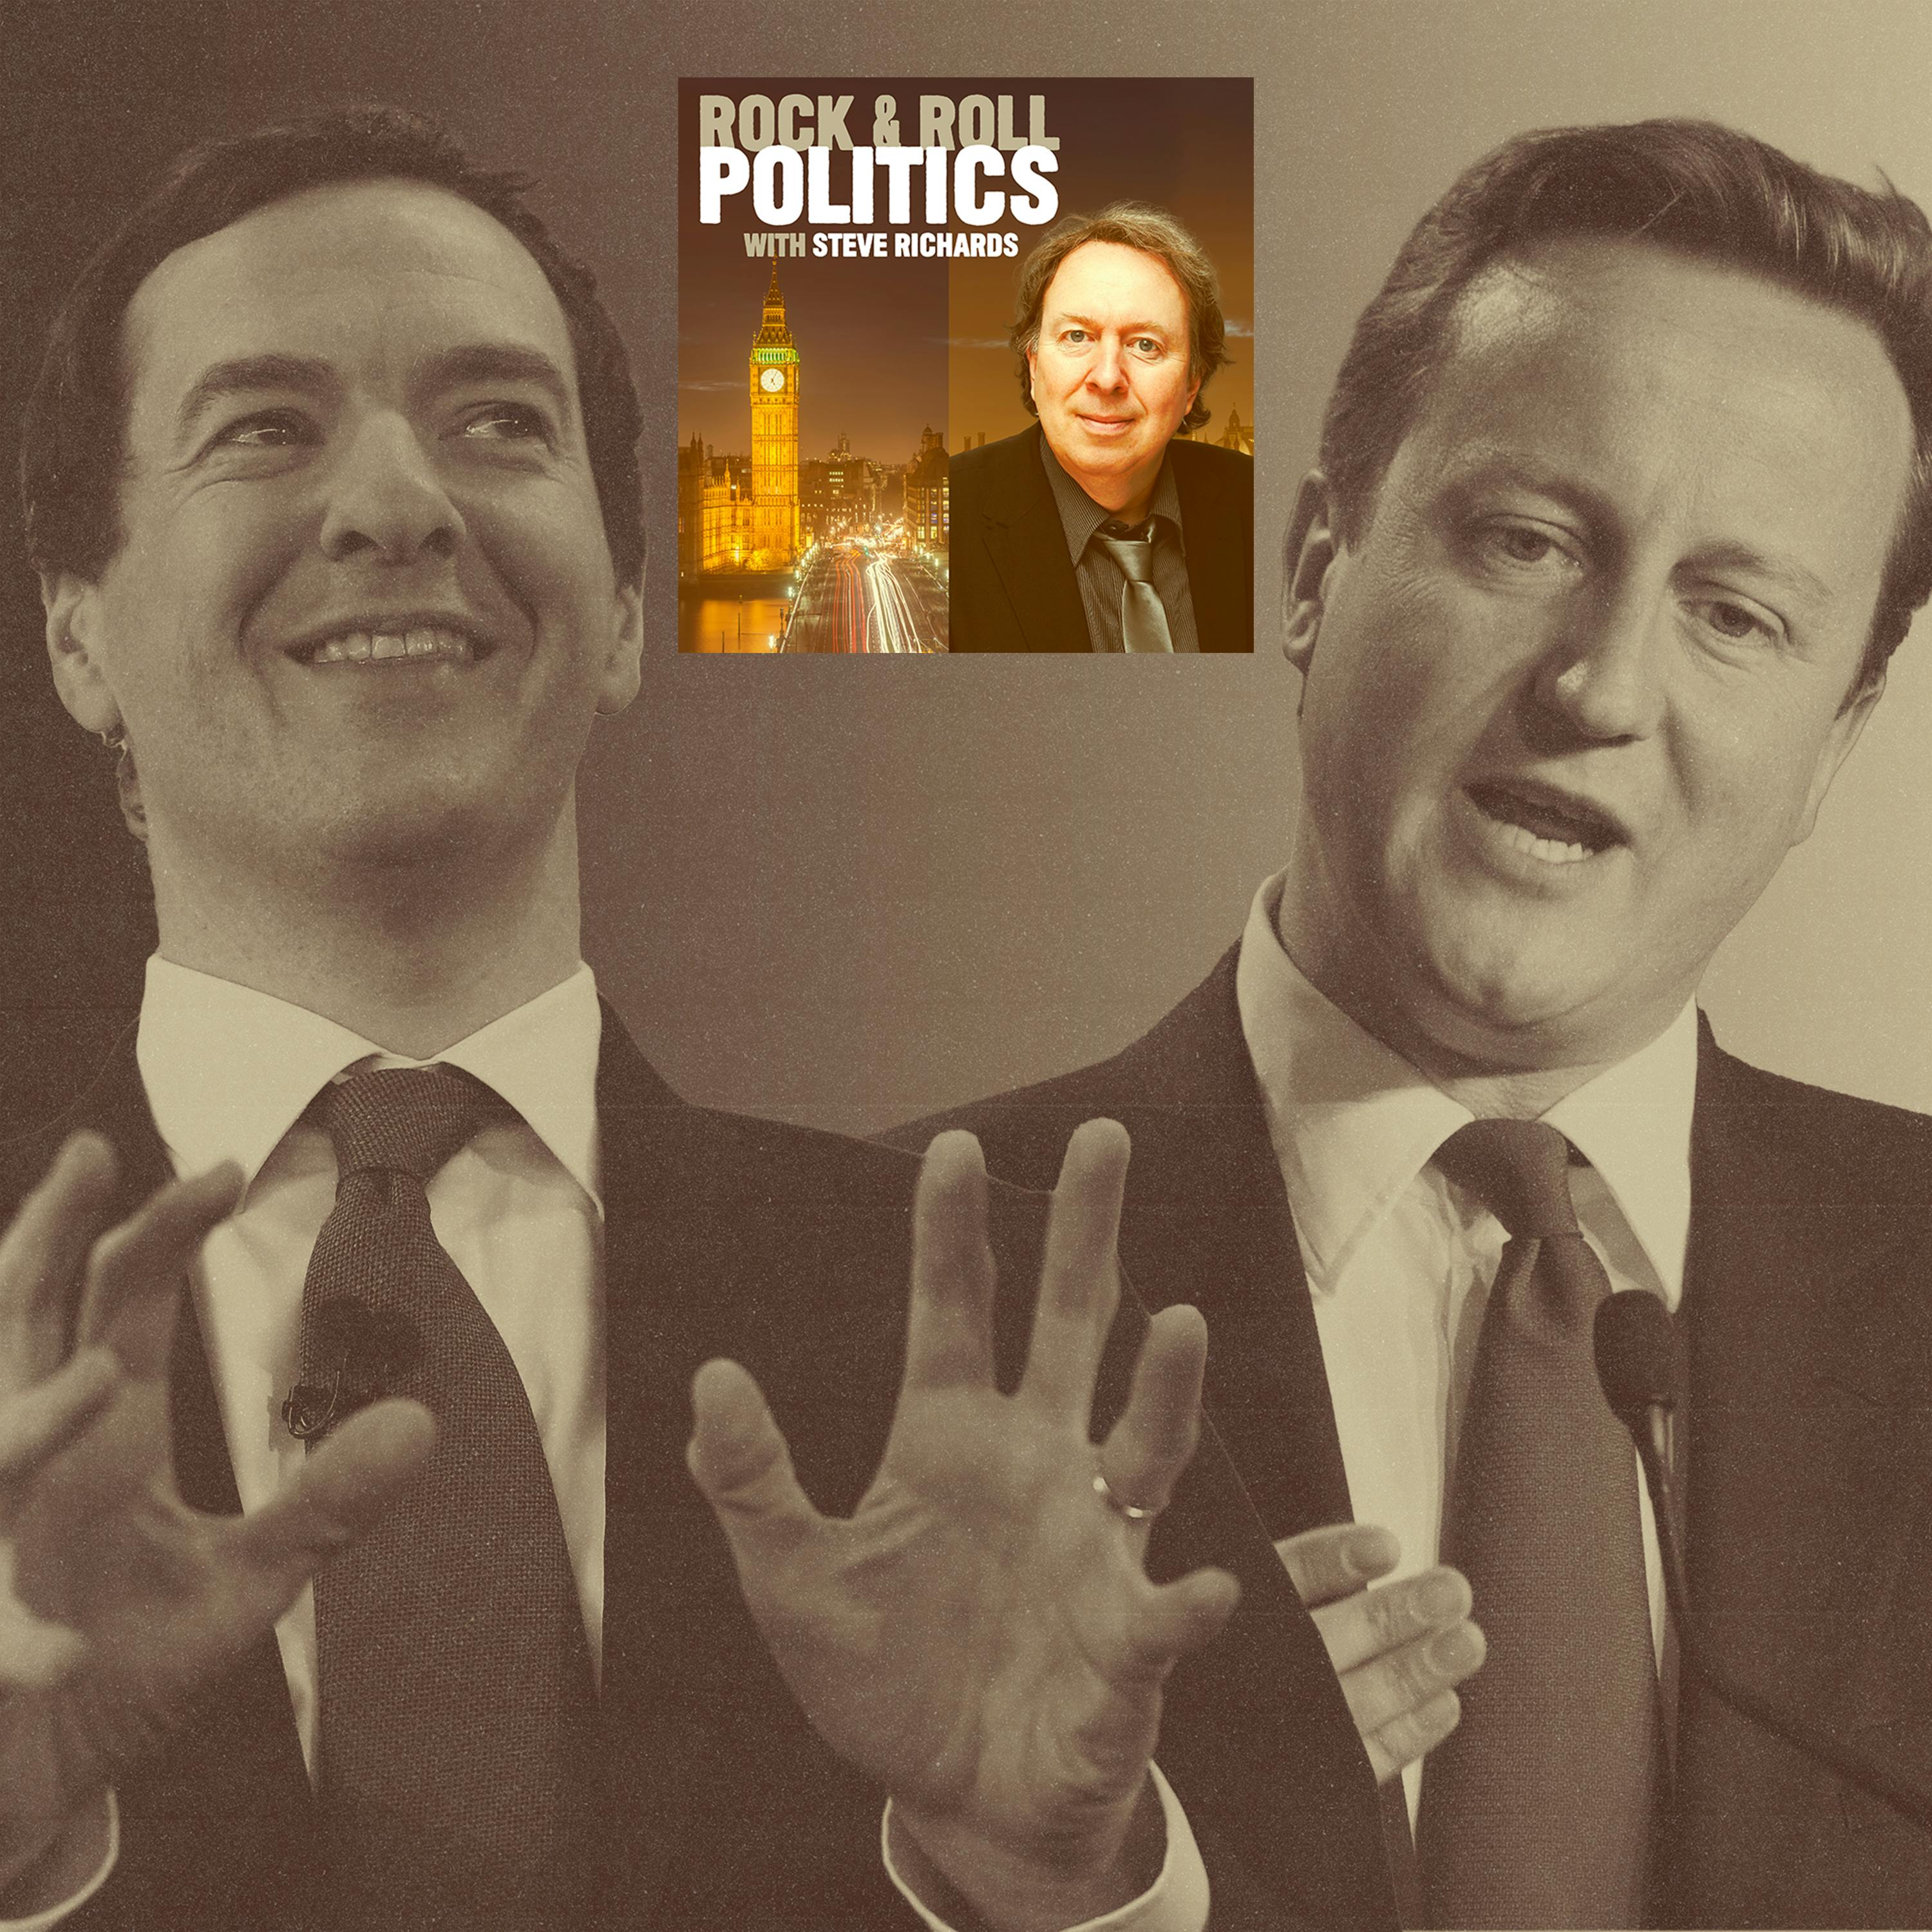 Don’t forget David Cameron and George Osborne